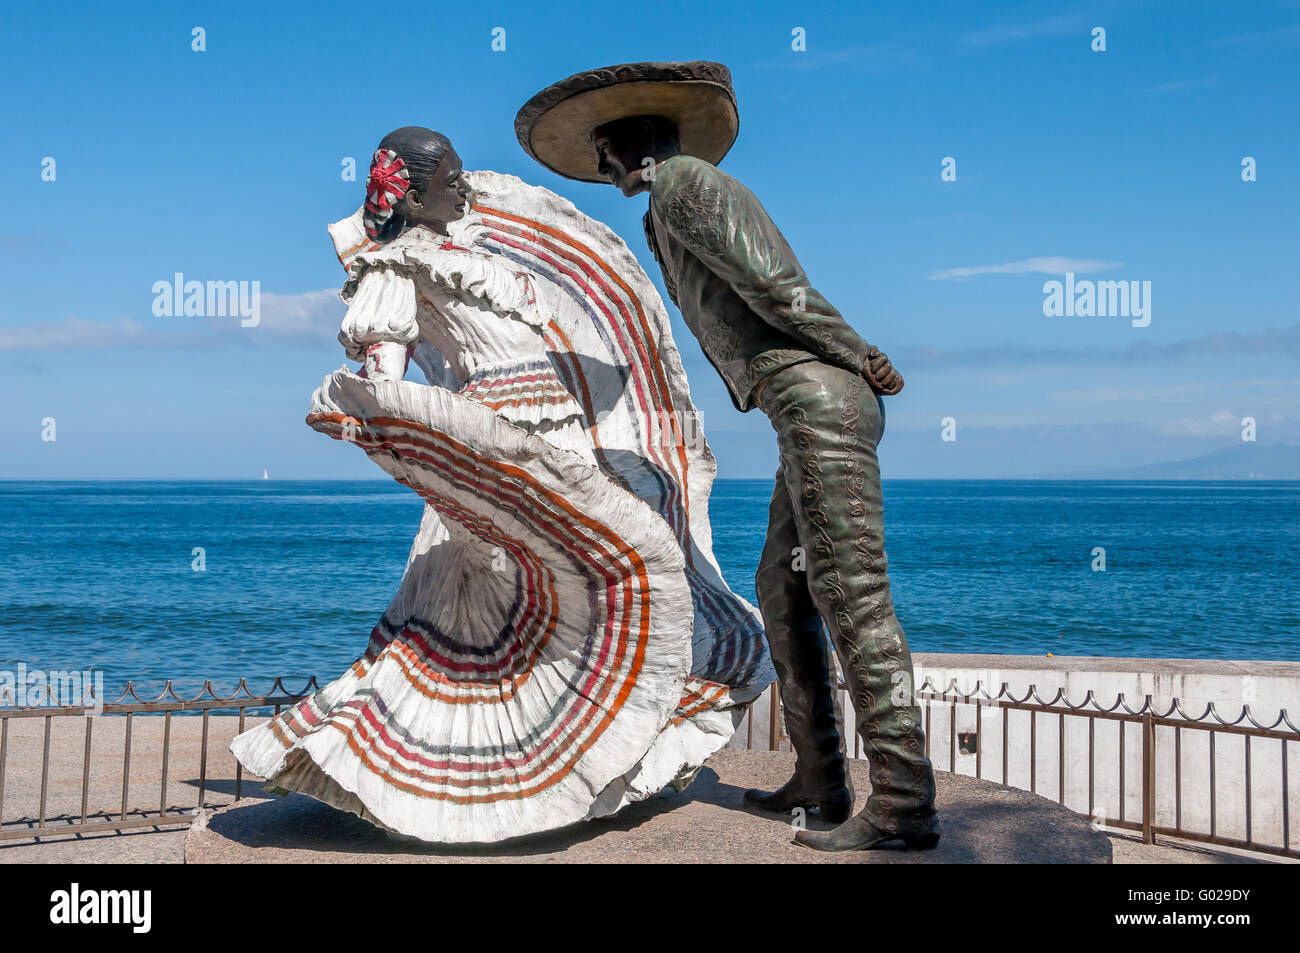 Bailarines de Vallarta / Dancers of Vallarta bronze sculpture on the malecon of Puerto Vallarta, dancing the Mexican Hat Dance Stock Photo